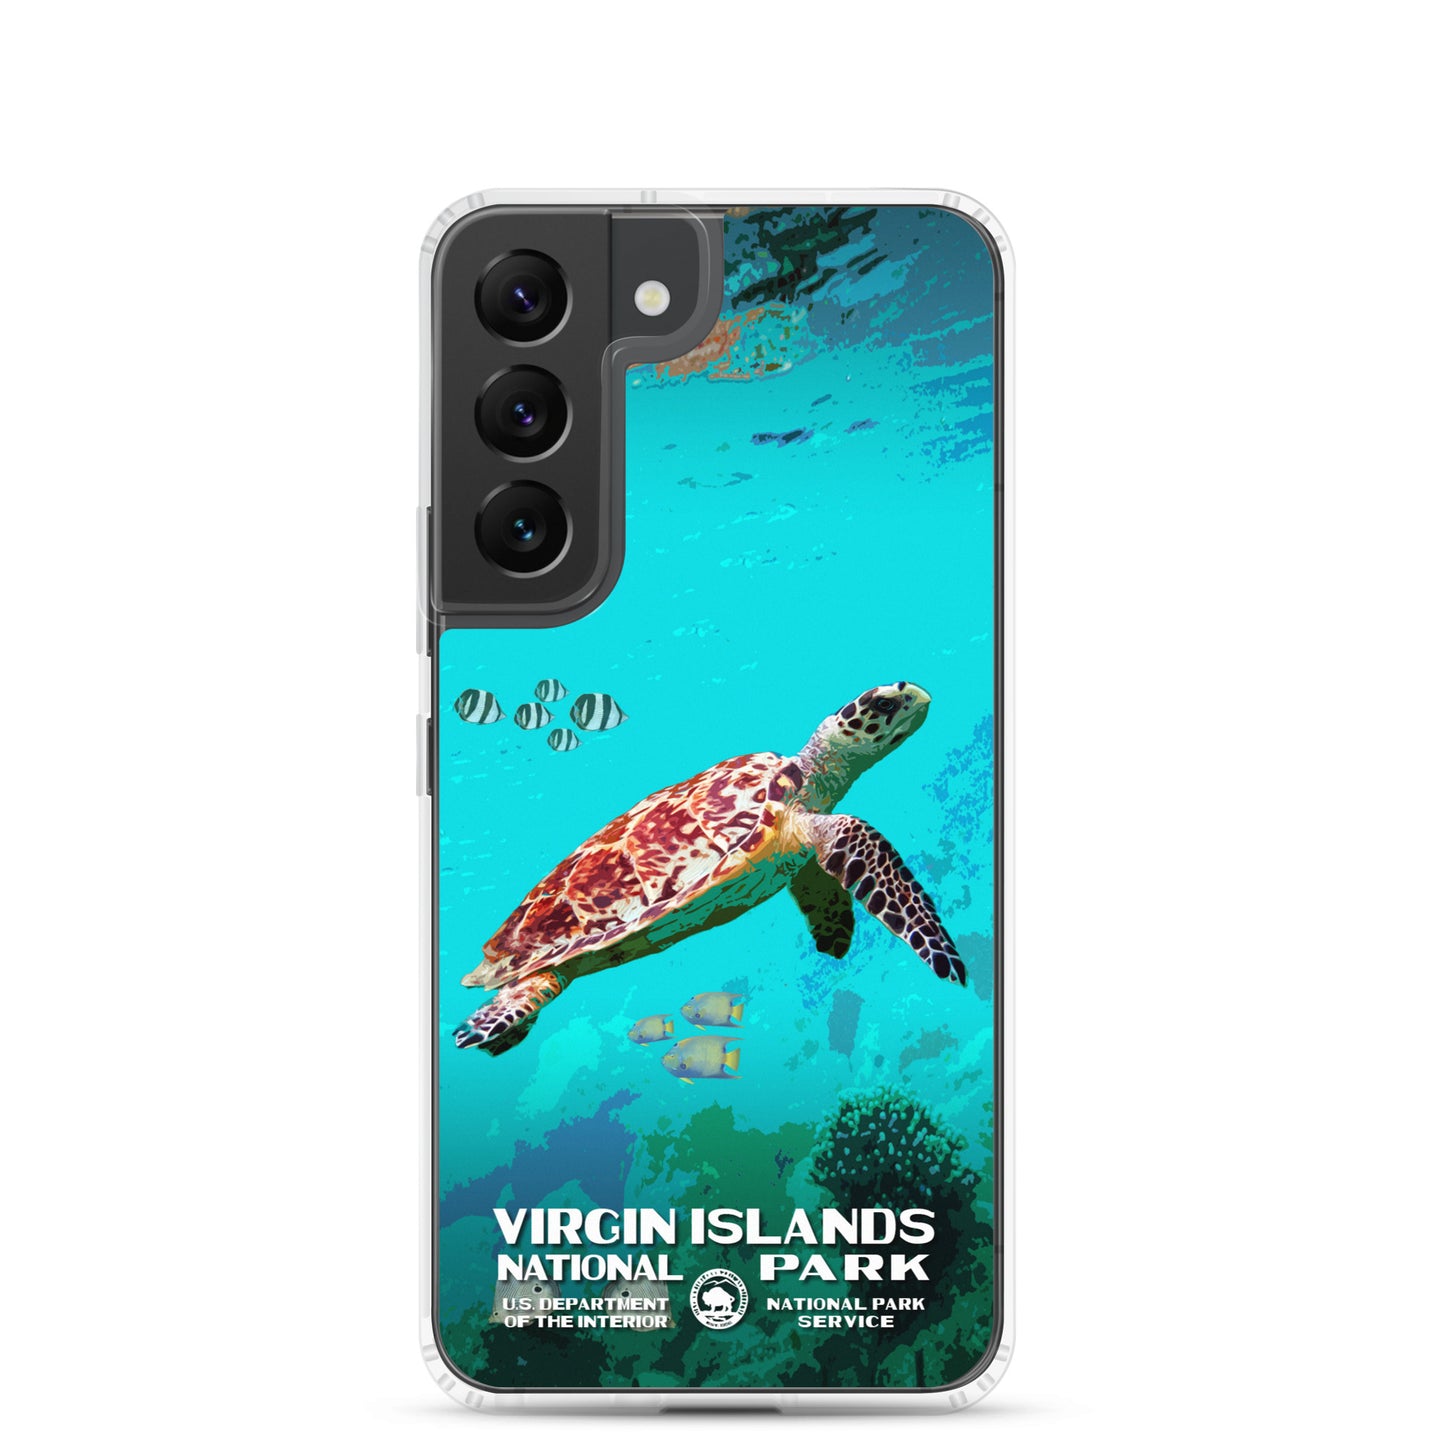 Virgin Islands Samsung® Phone Case